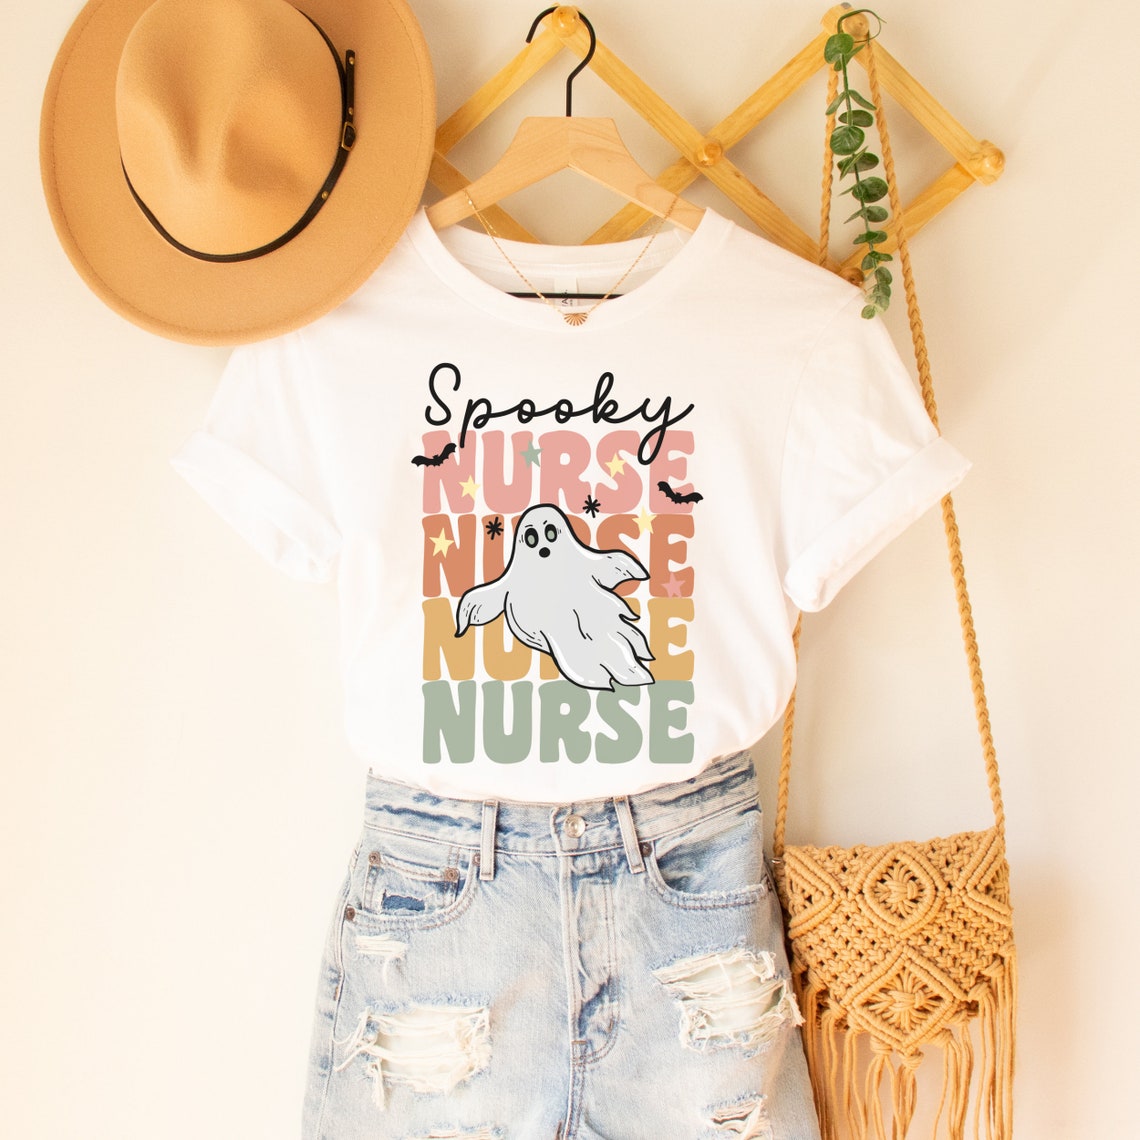 Retro Halloween nurse shirt, Spooky Nurse Shirt,Spooky Season,Fall Nurse Shirt,Gift for Nurse, New Nurse, Funny Nurse Tee, Nurse Ghost shirt